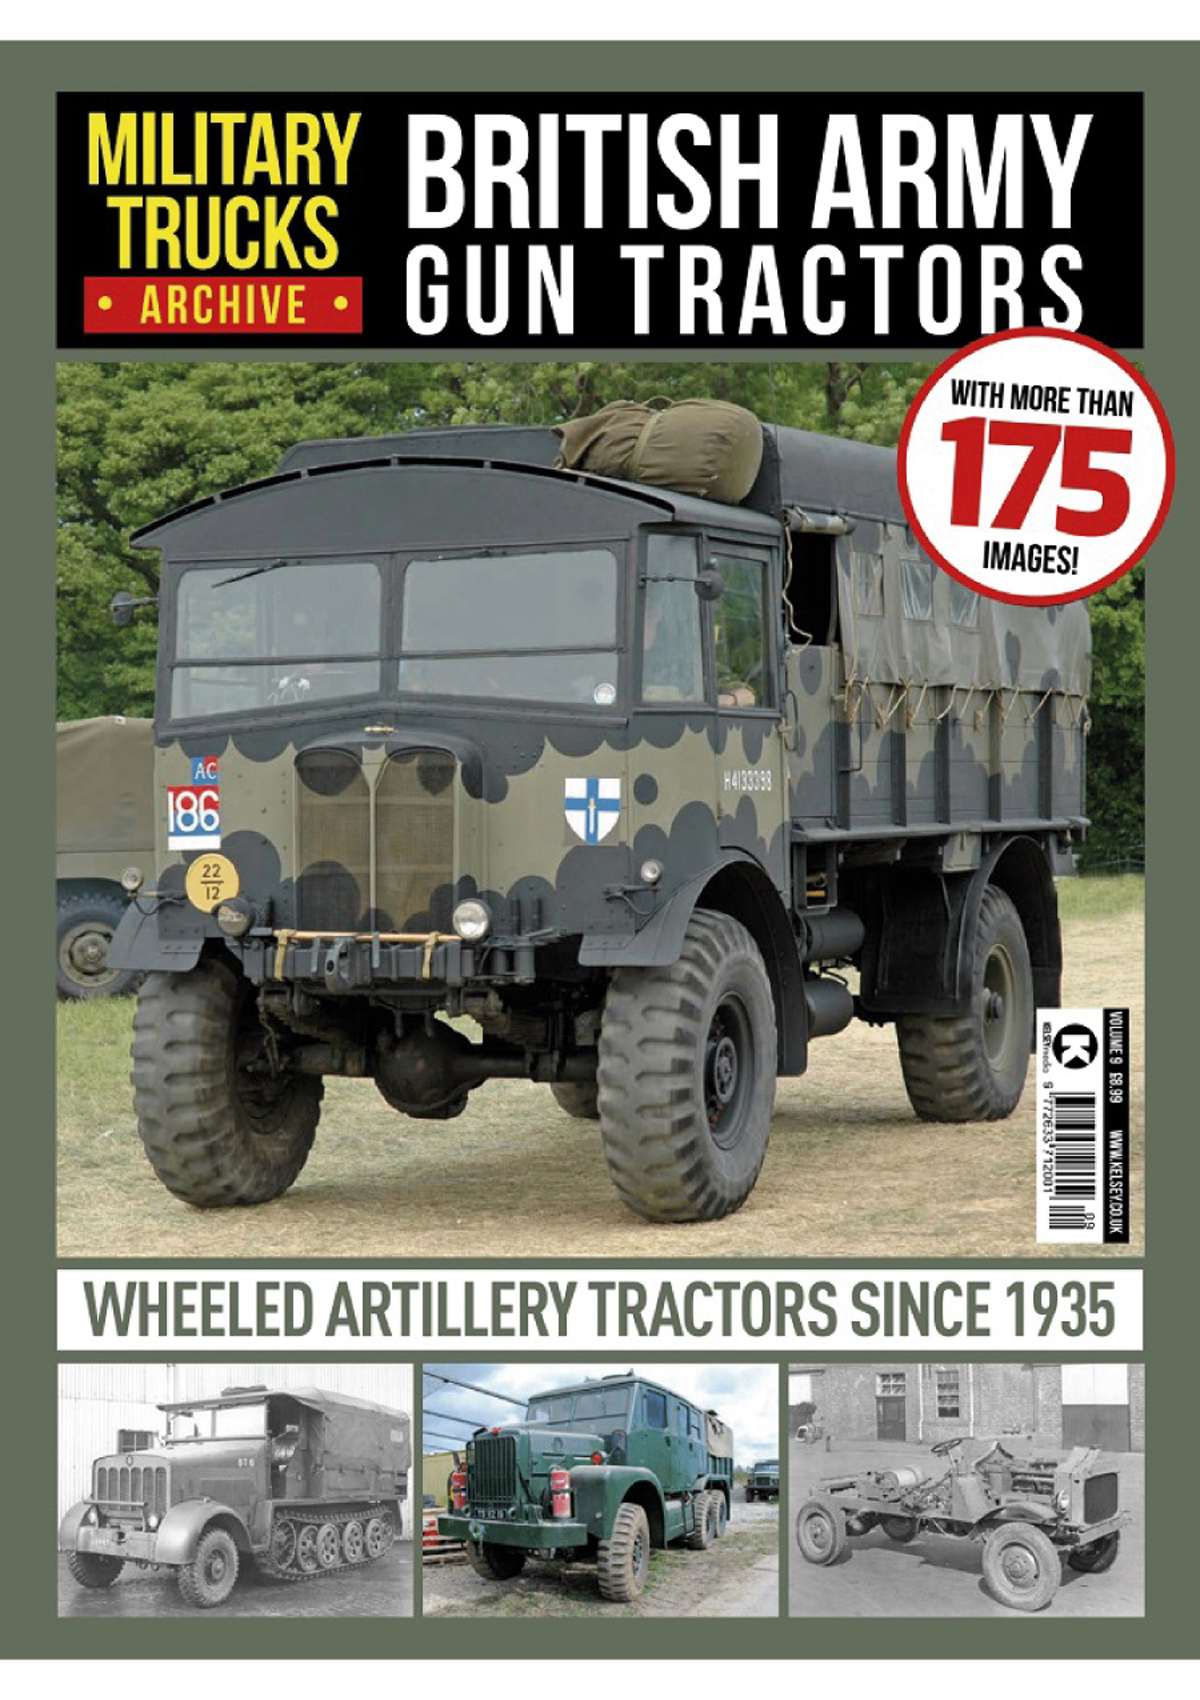 Military Trucks Archive
:British Army Gun Tractors
